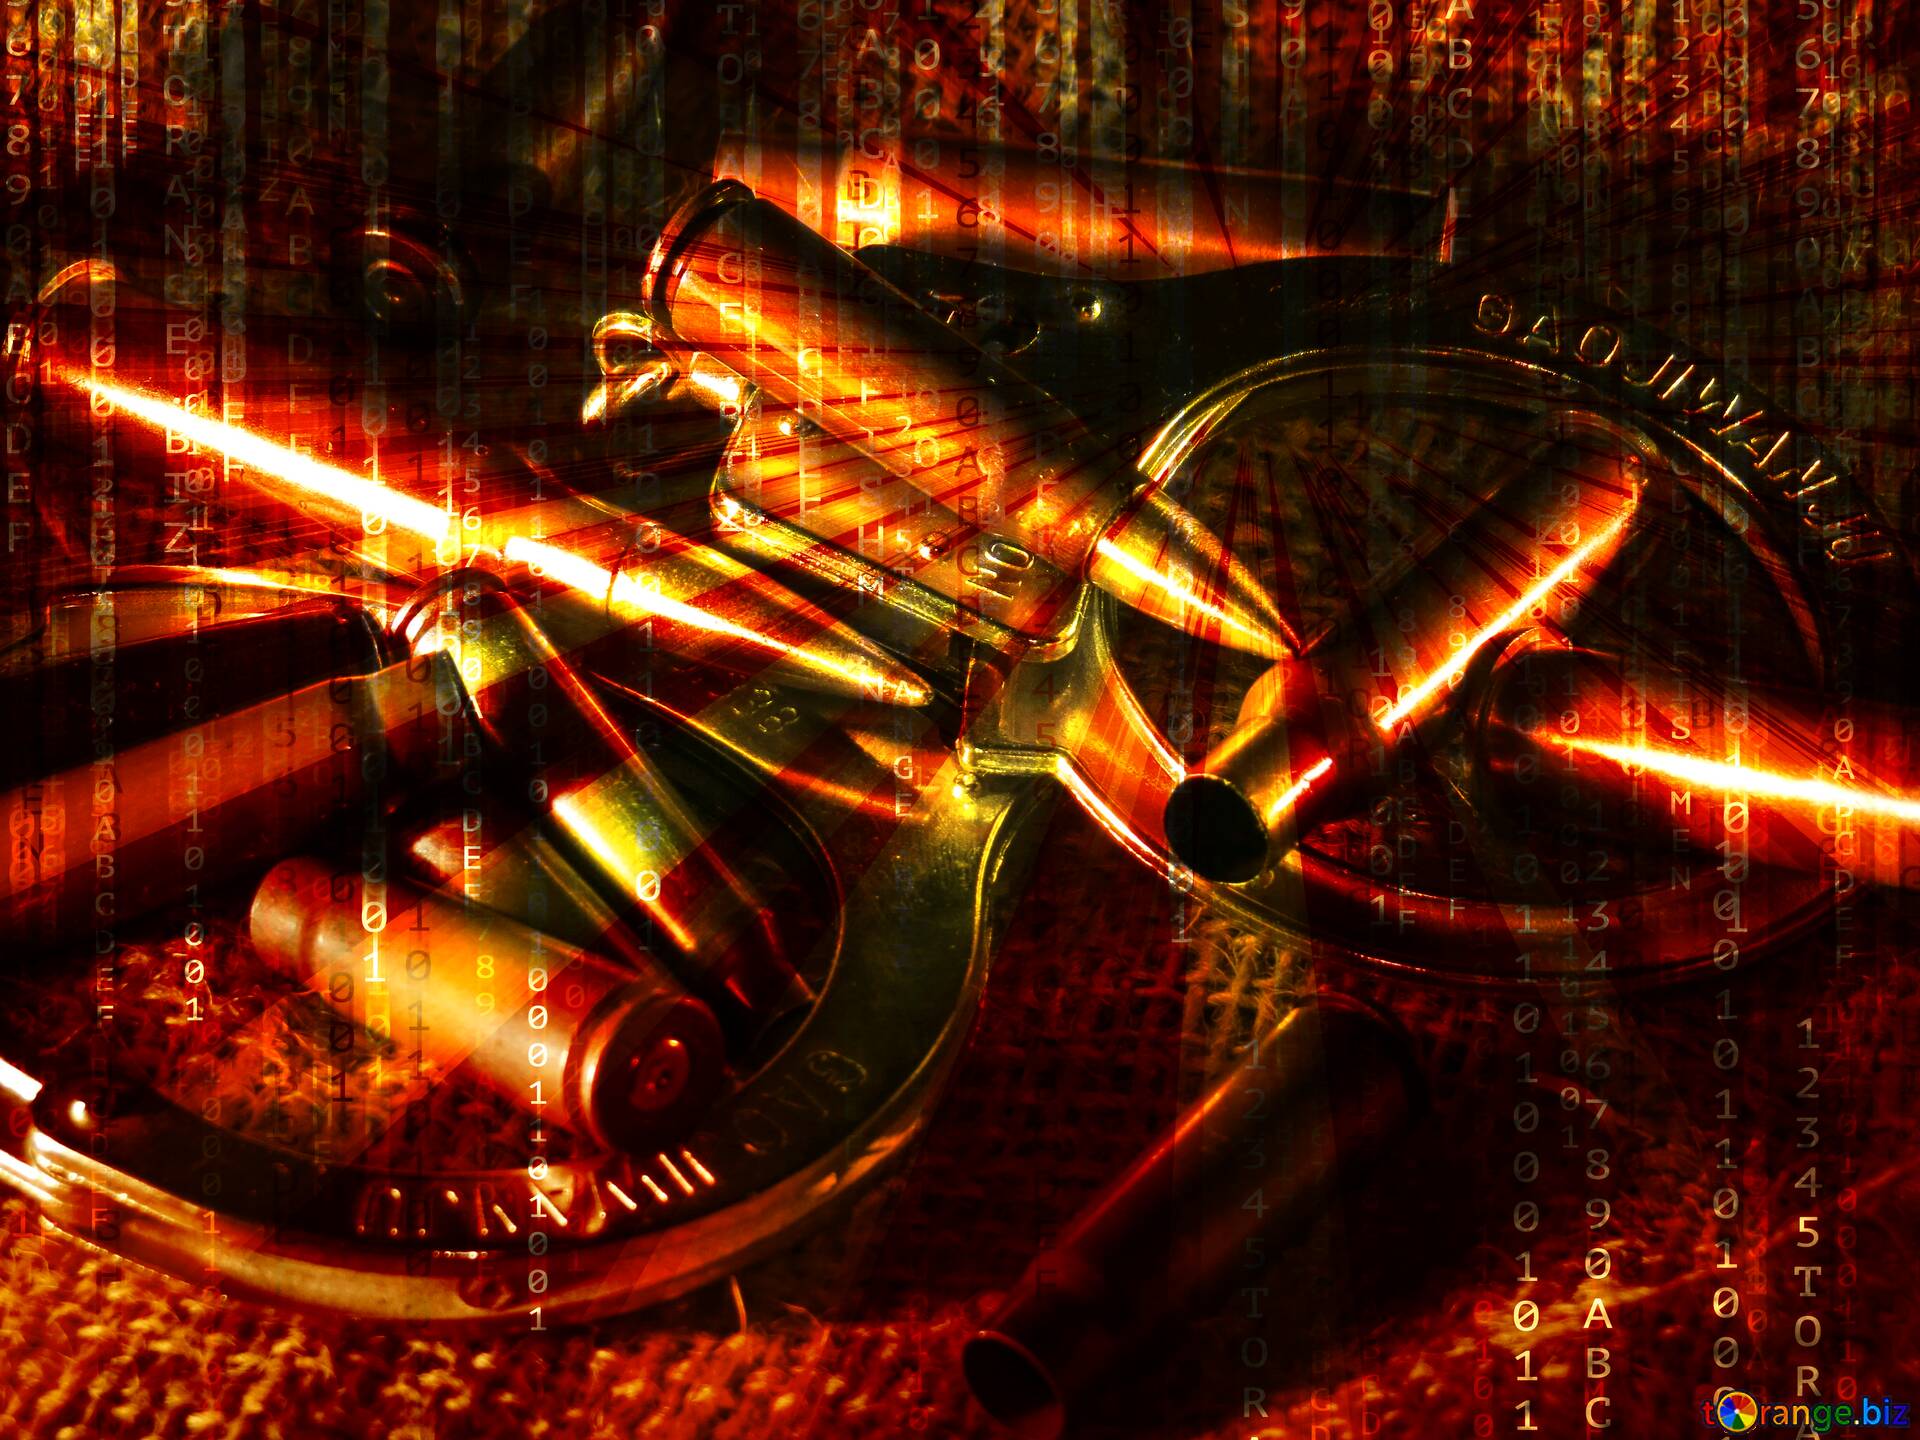 200+ Free Cyber Crime & Hacker Images - Pixabay